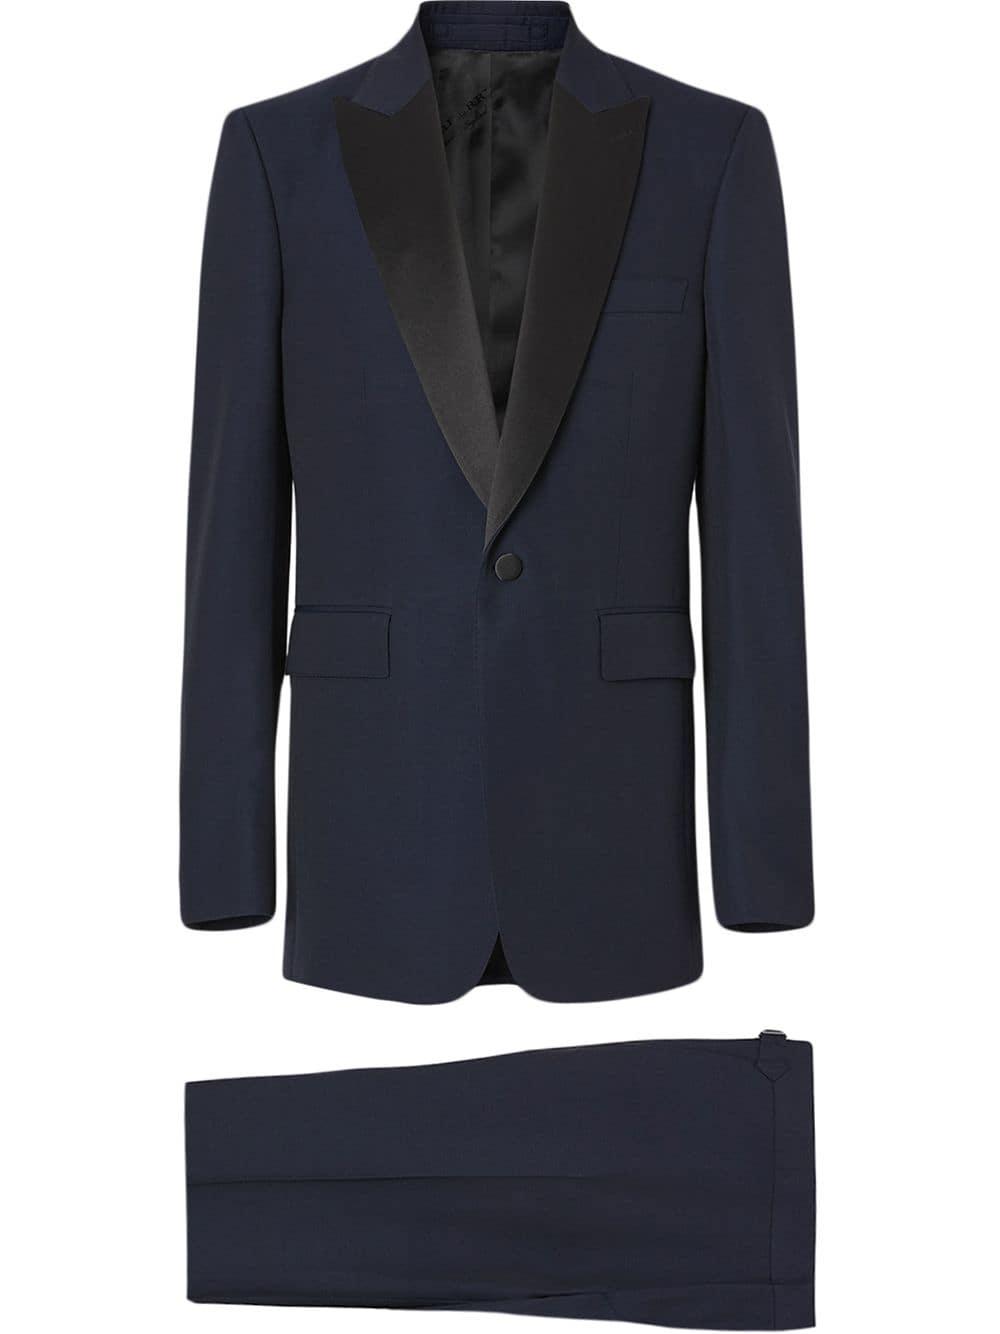 Burberry Classic Fit Wool Silk Tuxedo in Blue for Men - Lyst